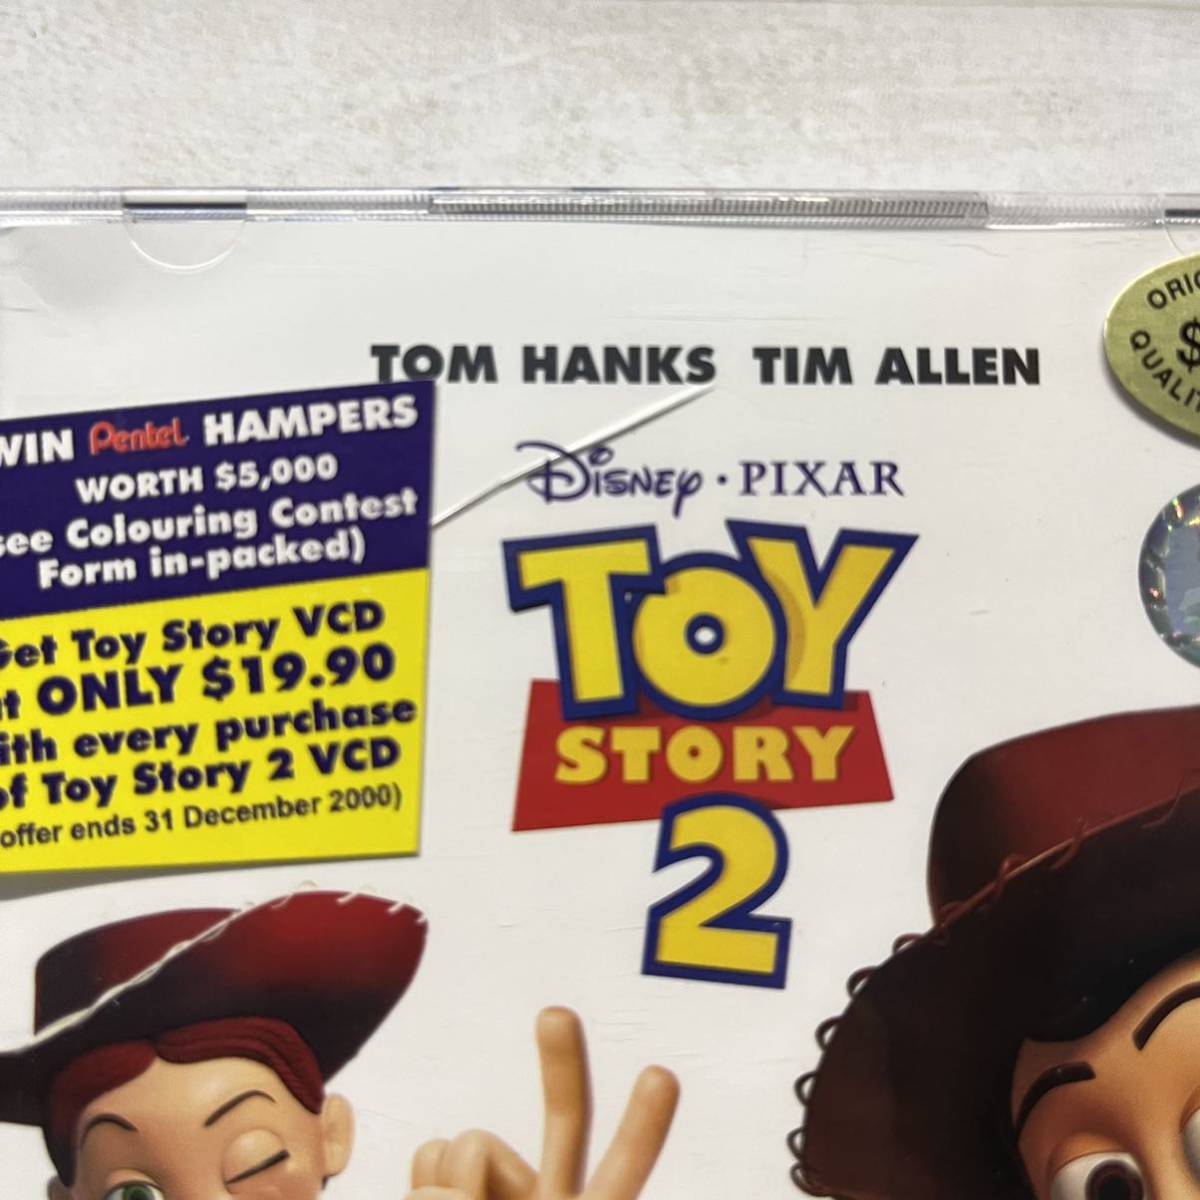 VCD Disney Pixar TOY story 2 2VCD